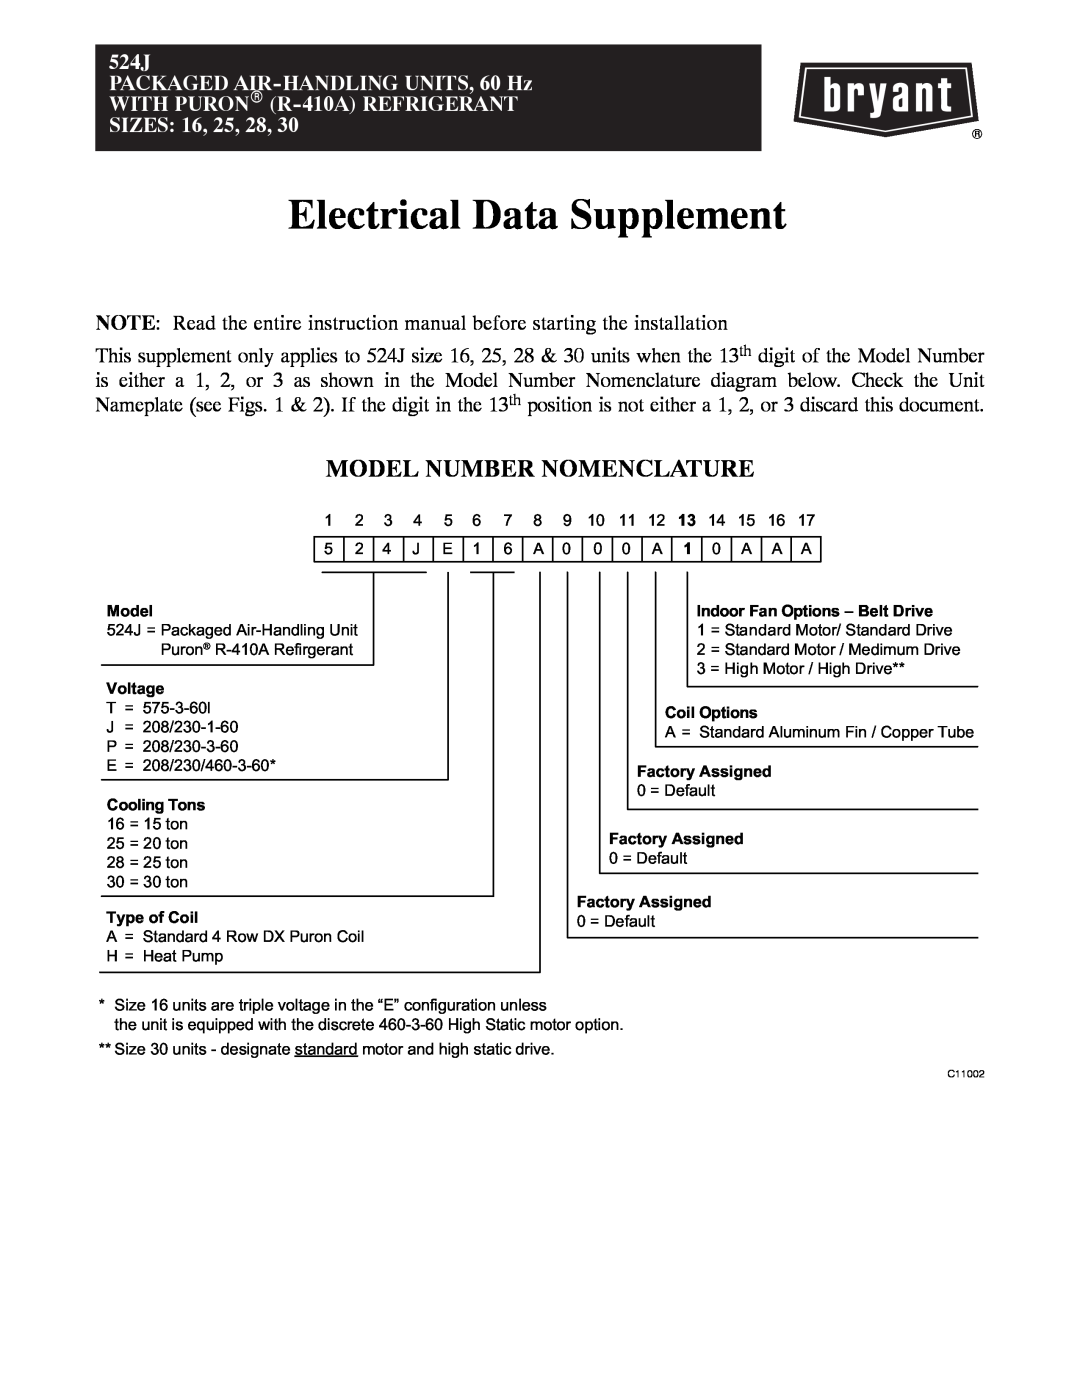 Bryant 542J instruction manual Model Number Nomenclature, Electrical Data Supplement, 524J 